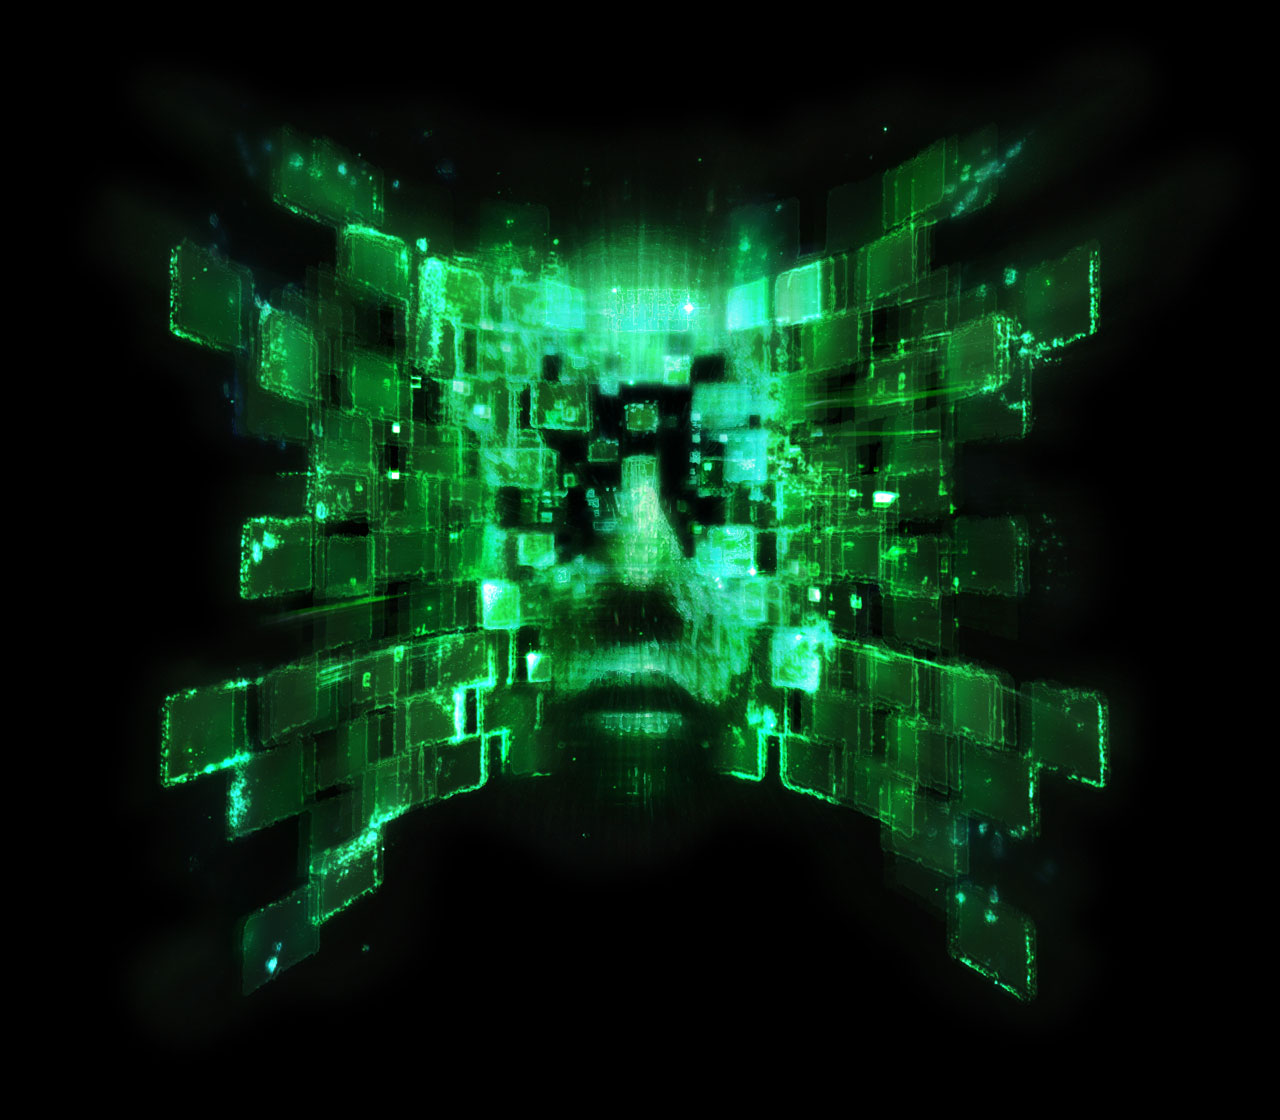 System Shock 3 がついに正式発表 名作 Bioshock を生んだシリーズに約16年振りの最新作 家庭用コンソールや Vr 向けの展開も Automaton